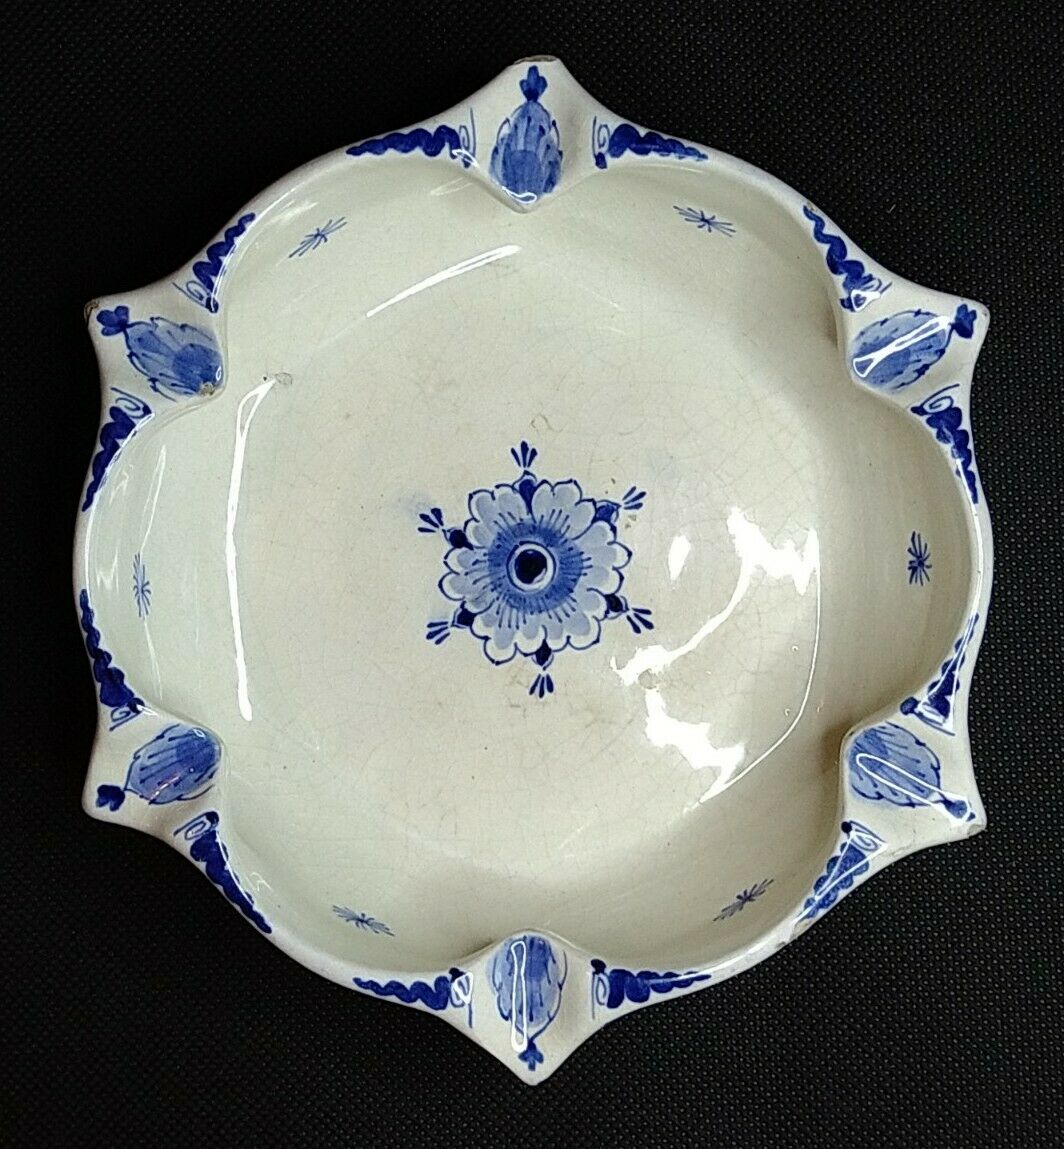 Antique Delft Hexagonal Blue and White Floral Ashtray / Dish 16cm Diameter